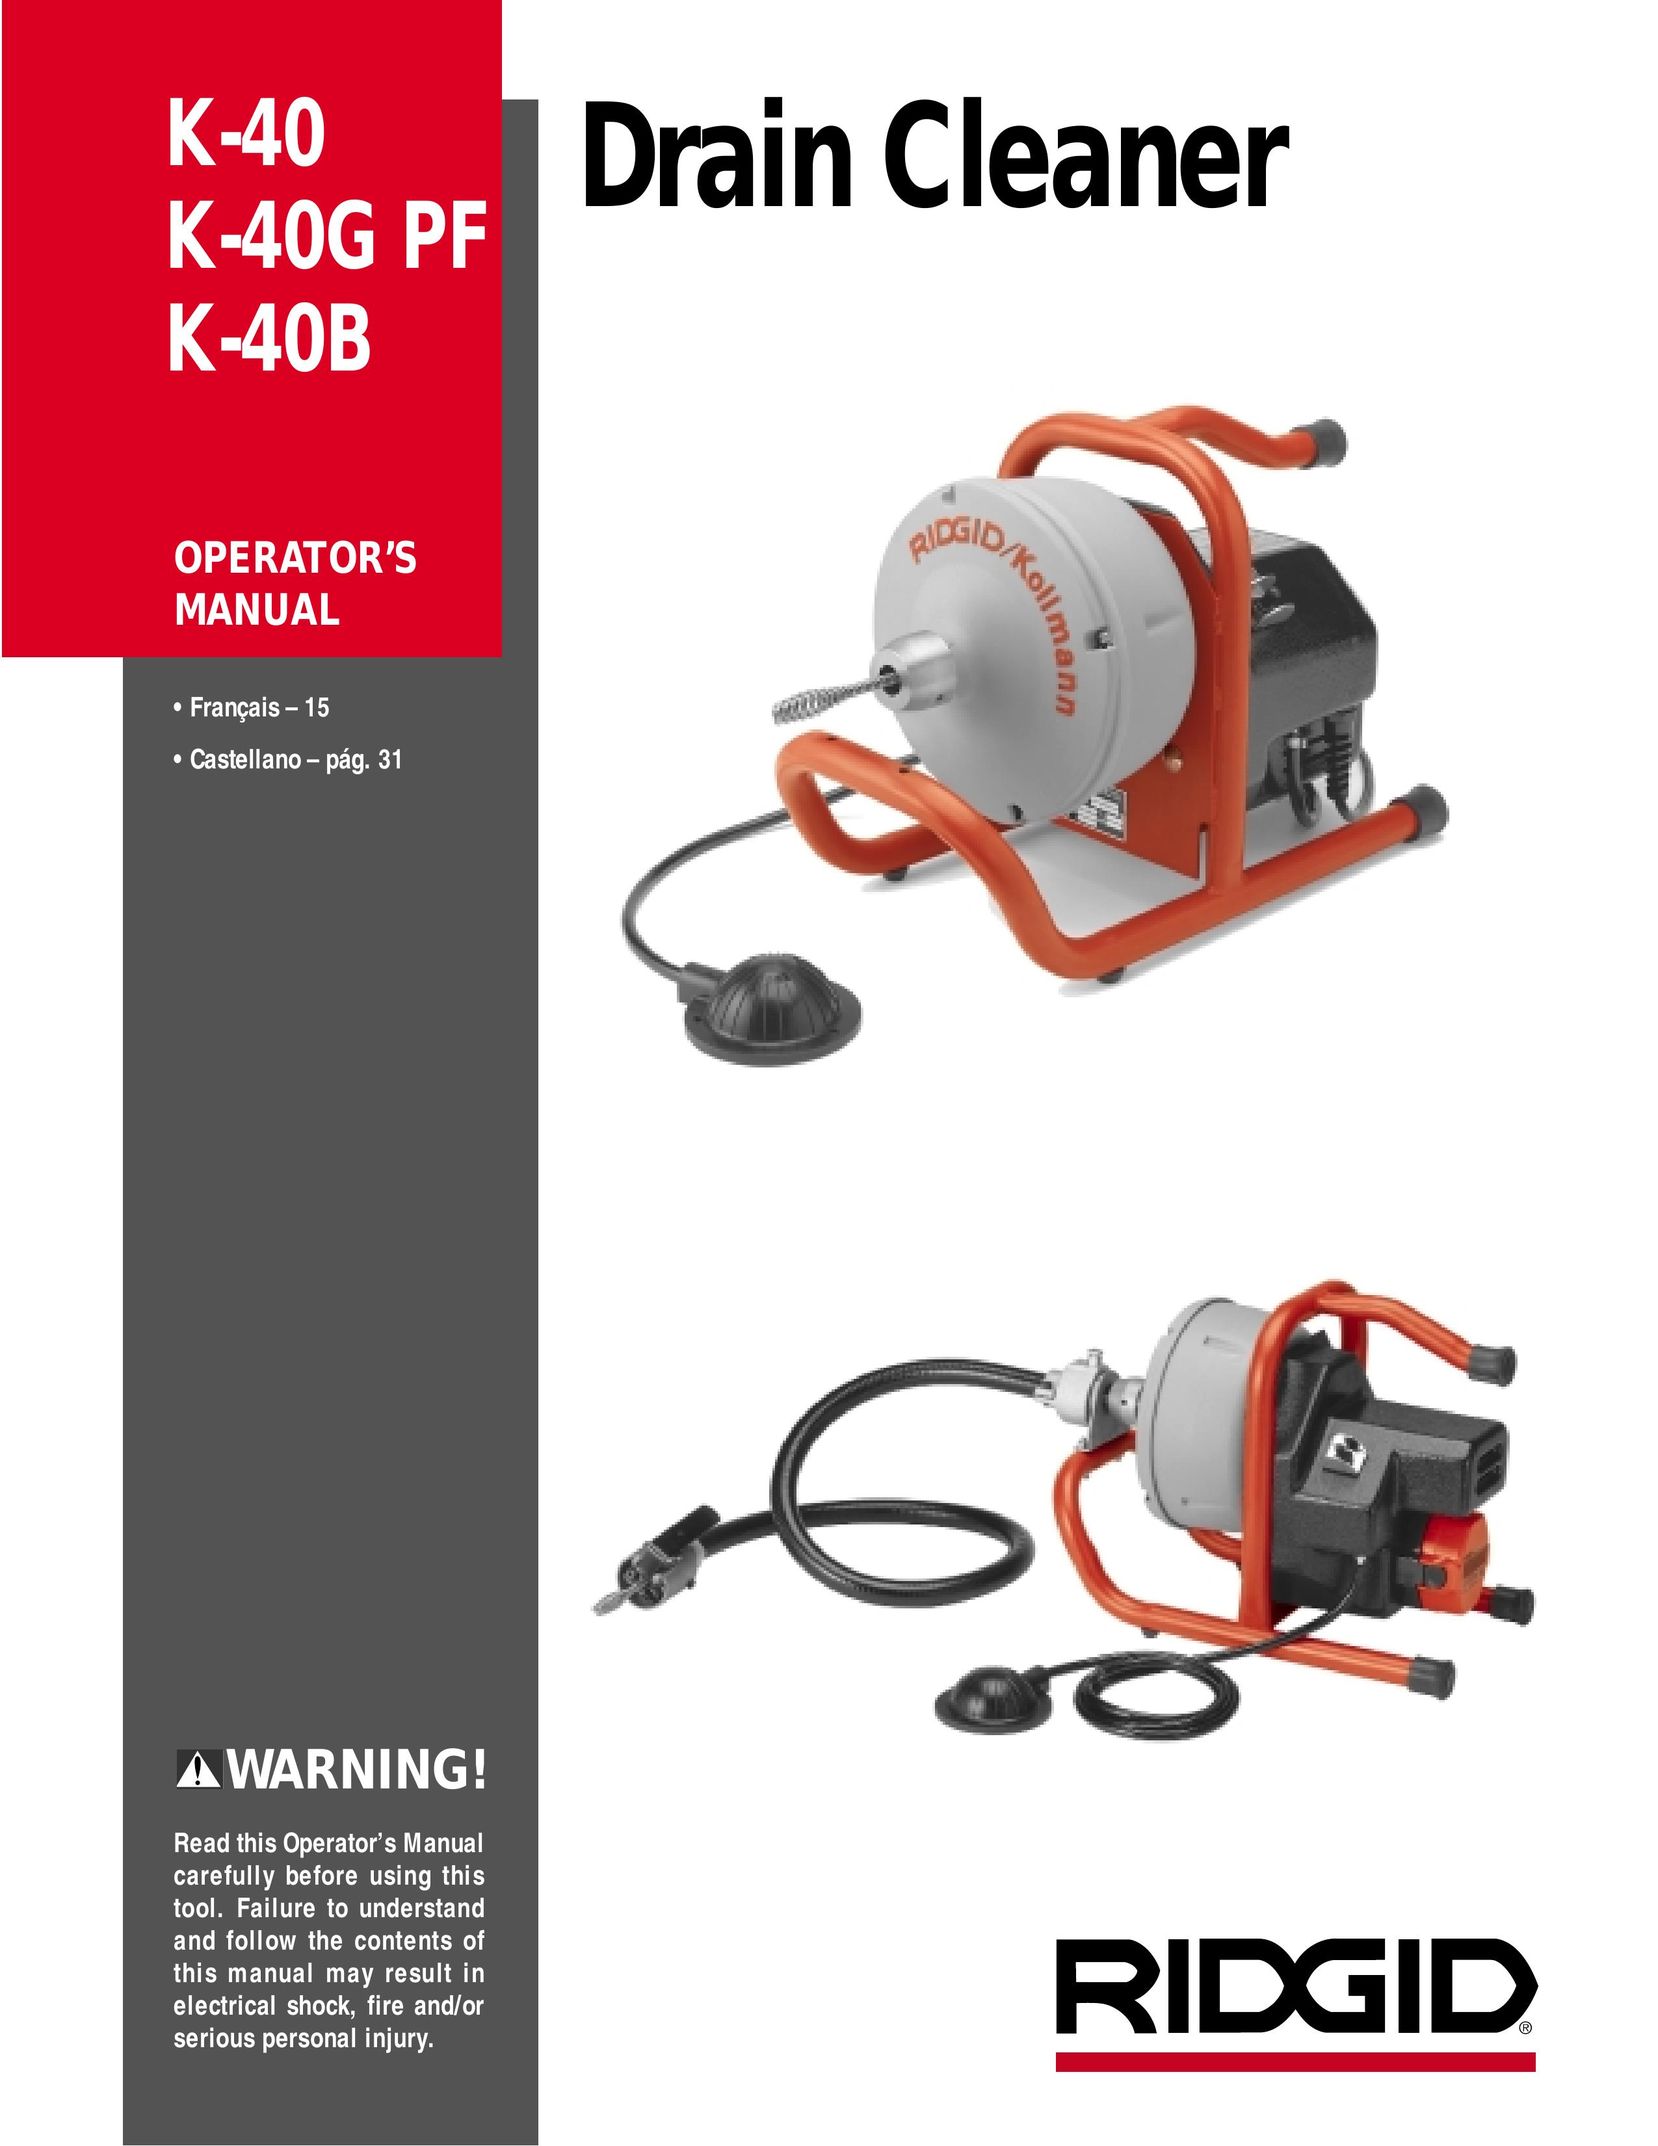 RIDGID K-40B Plumbing Product User Manual